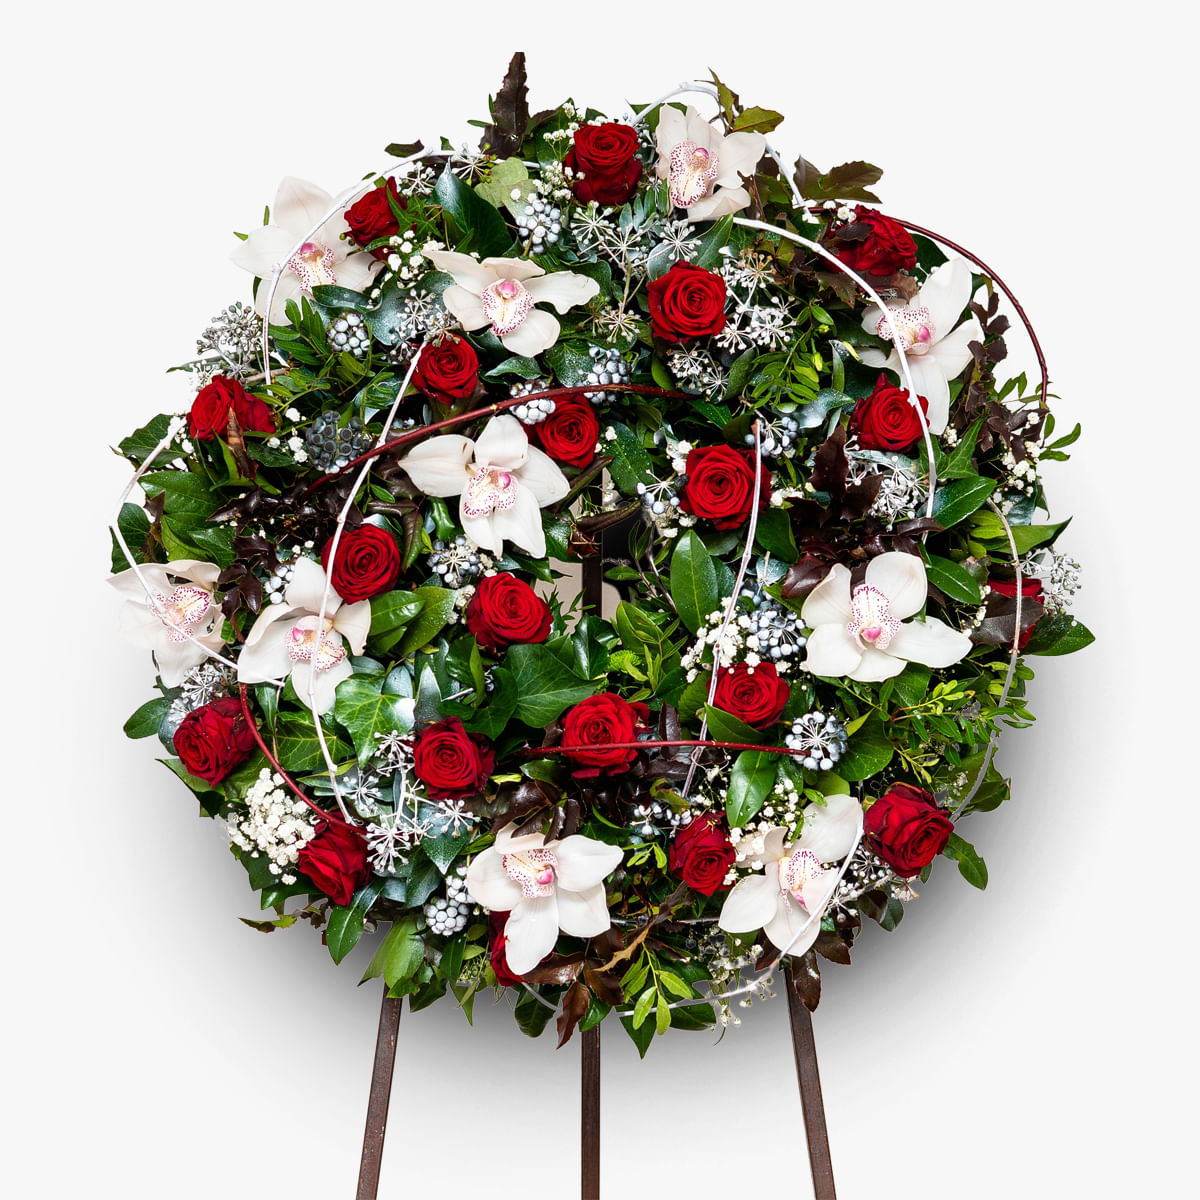 Coroana funerara cu trandafiri rosii si orhidee